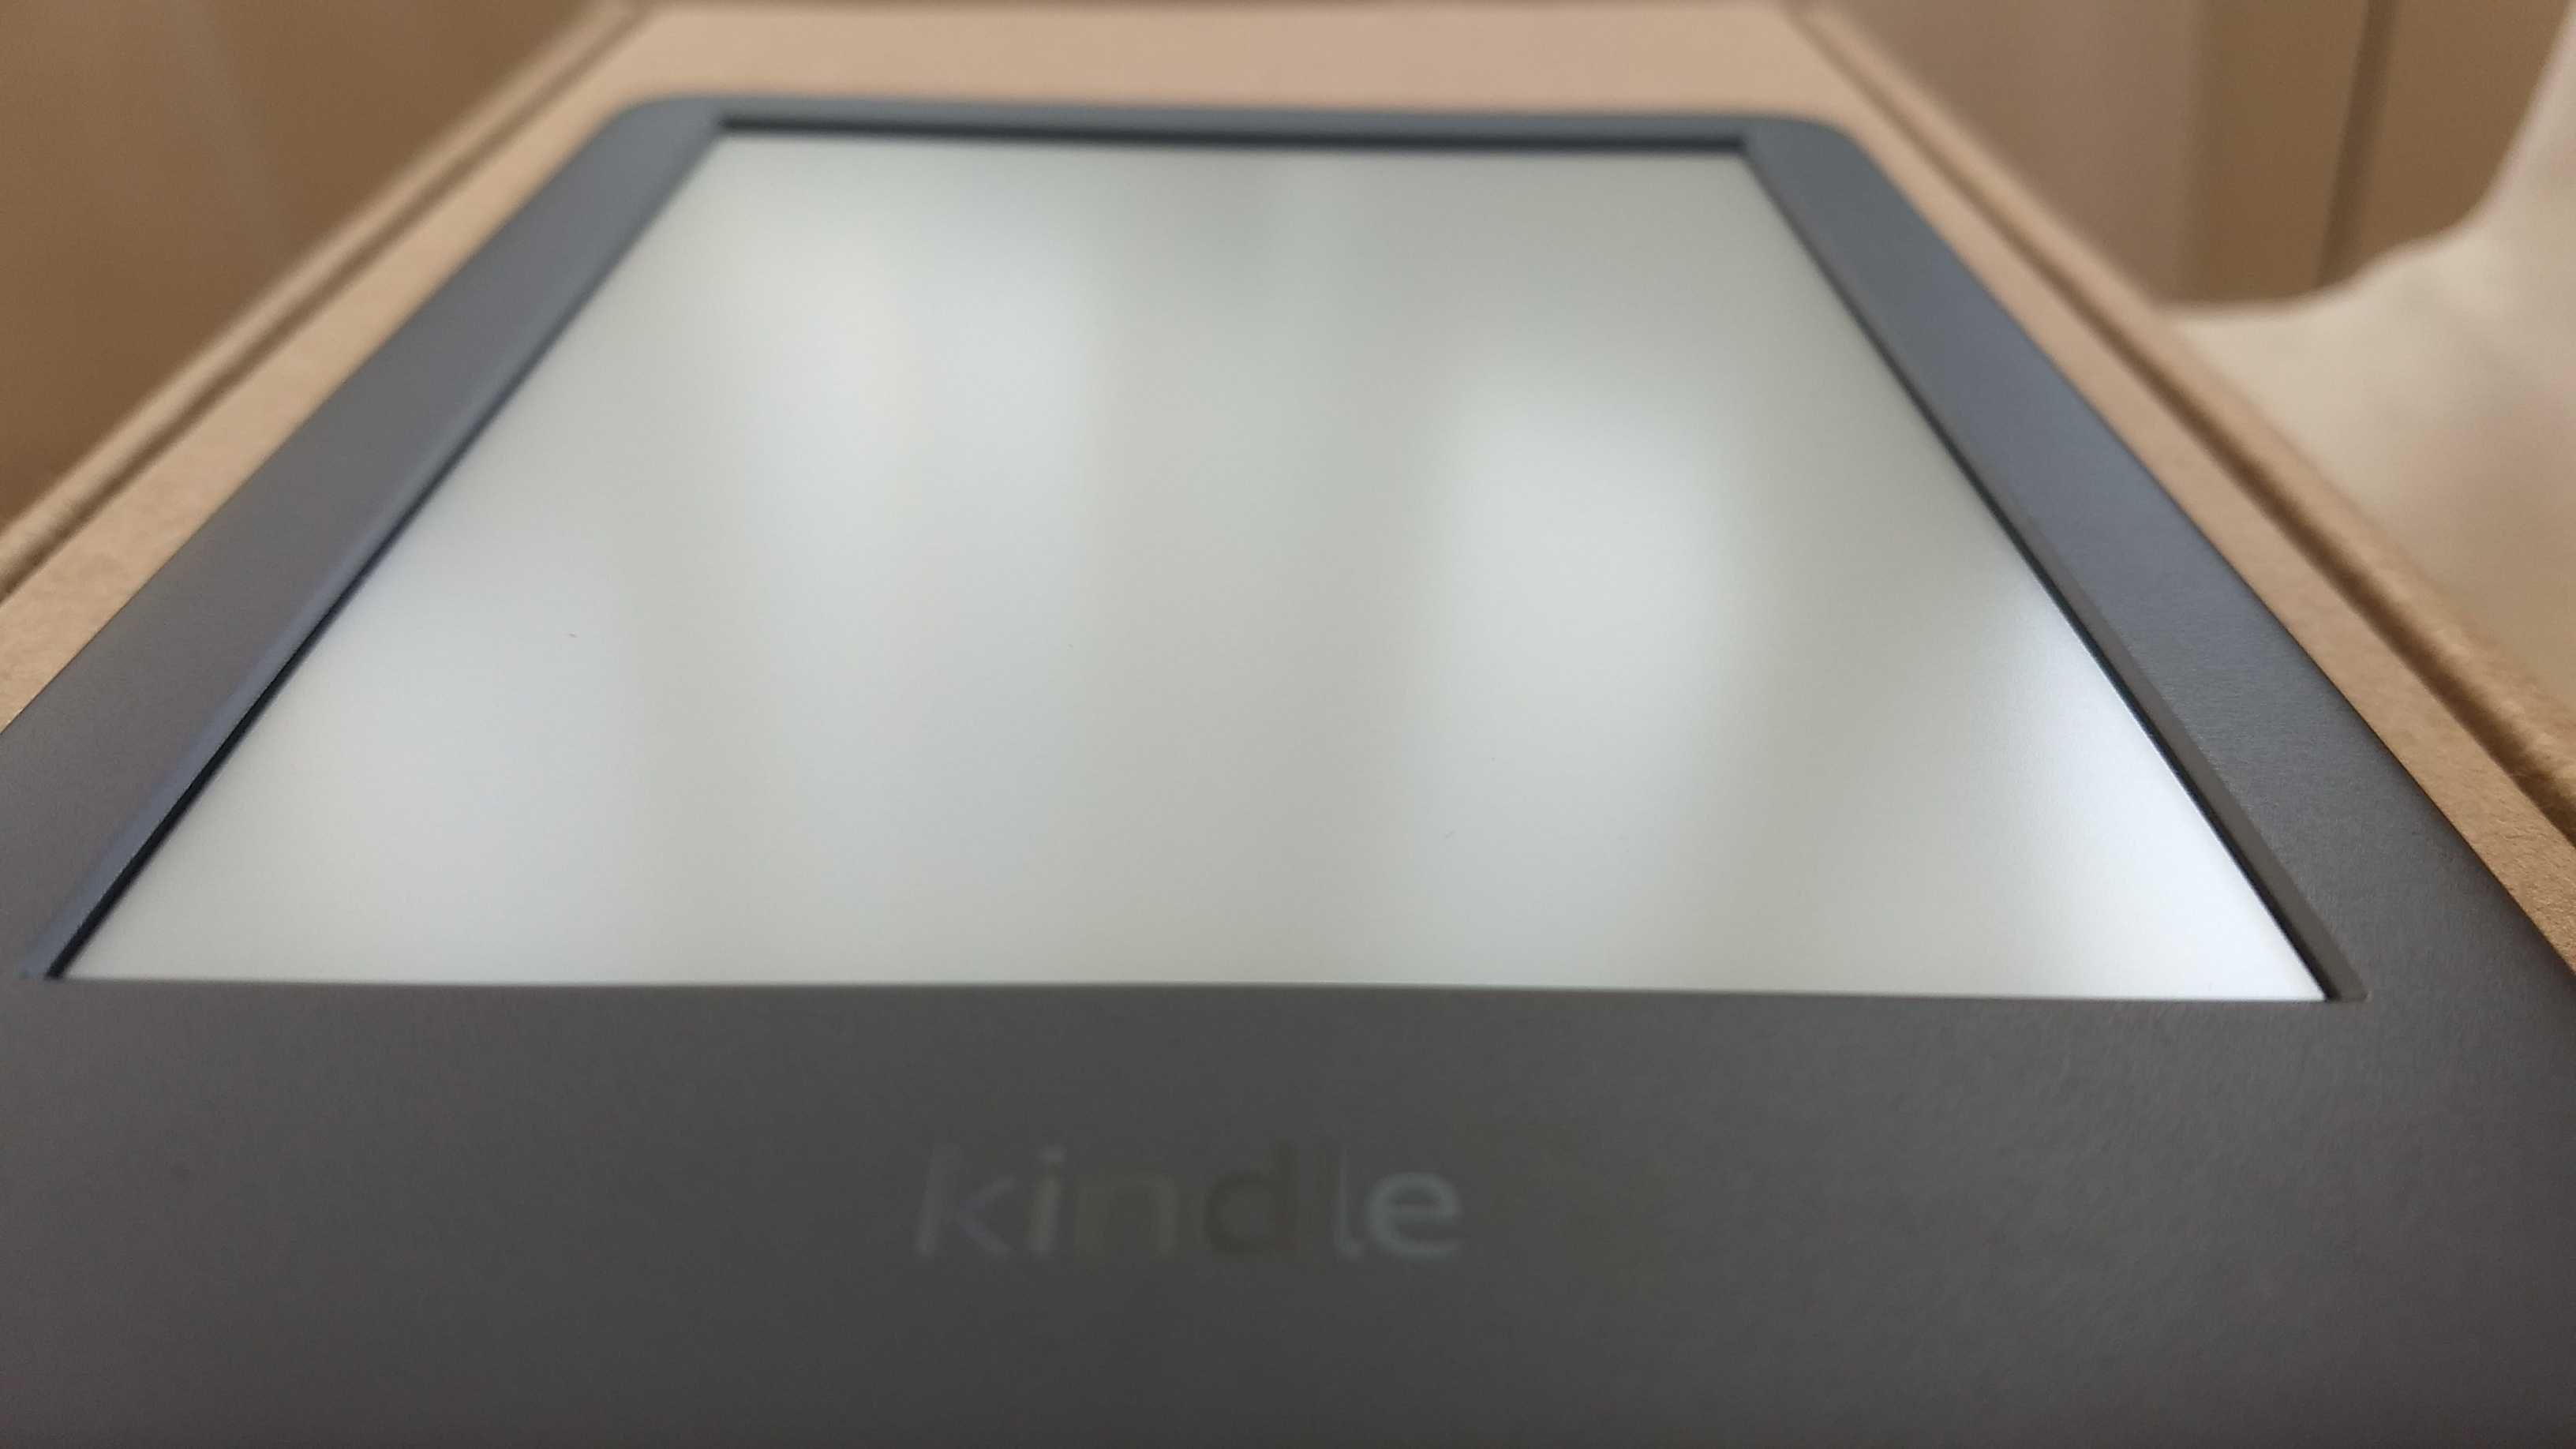 Электронная книга Amazon Kindle All-New 10 Gen. с подсветкой